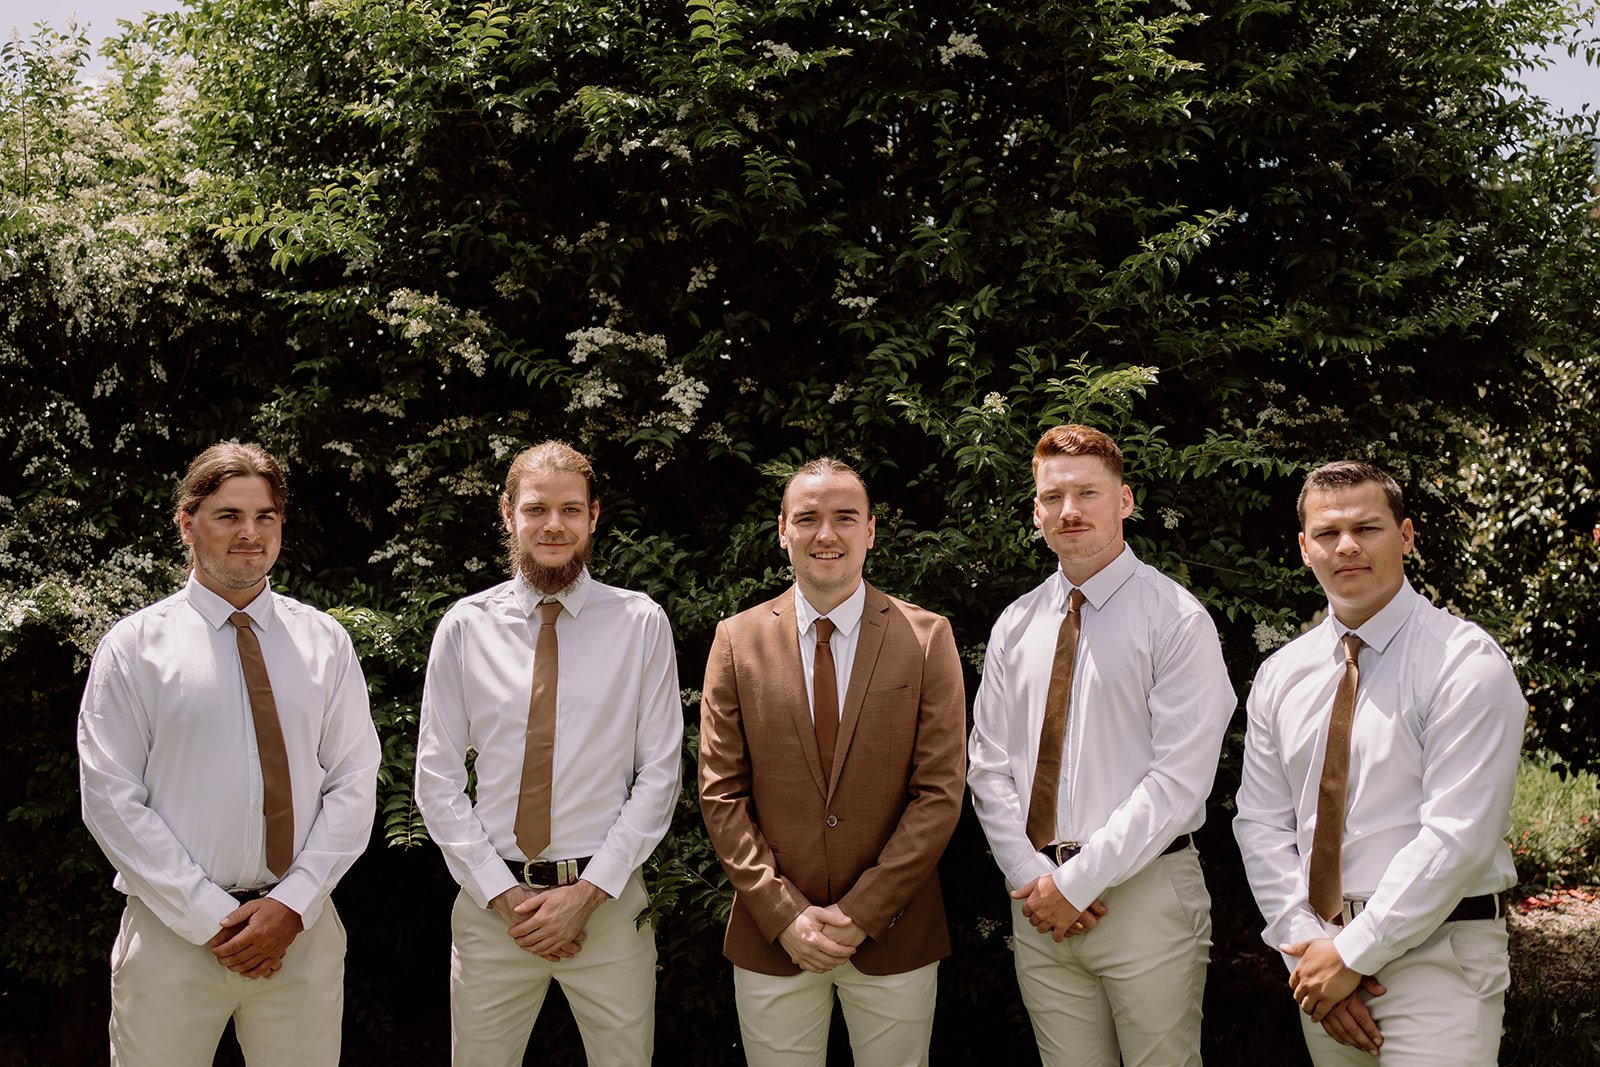 Groom and groomsmen standing together wearing cream pants and earthy brown tie